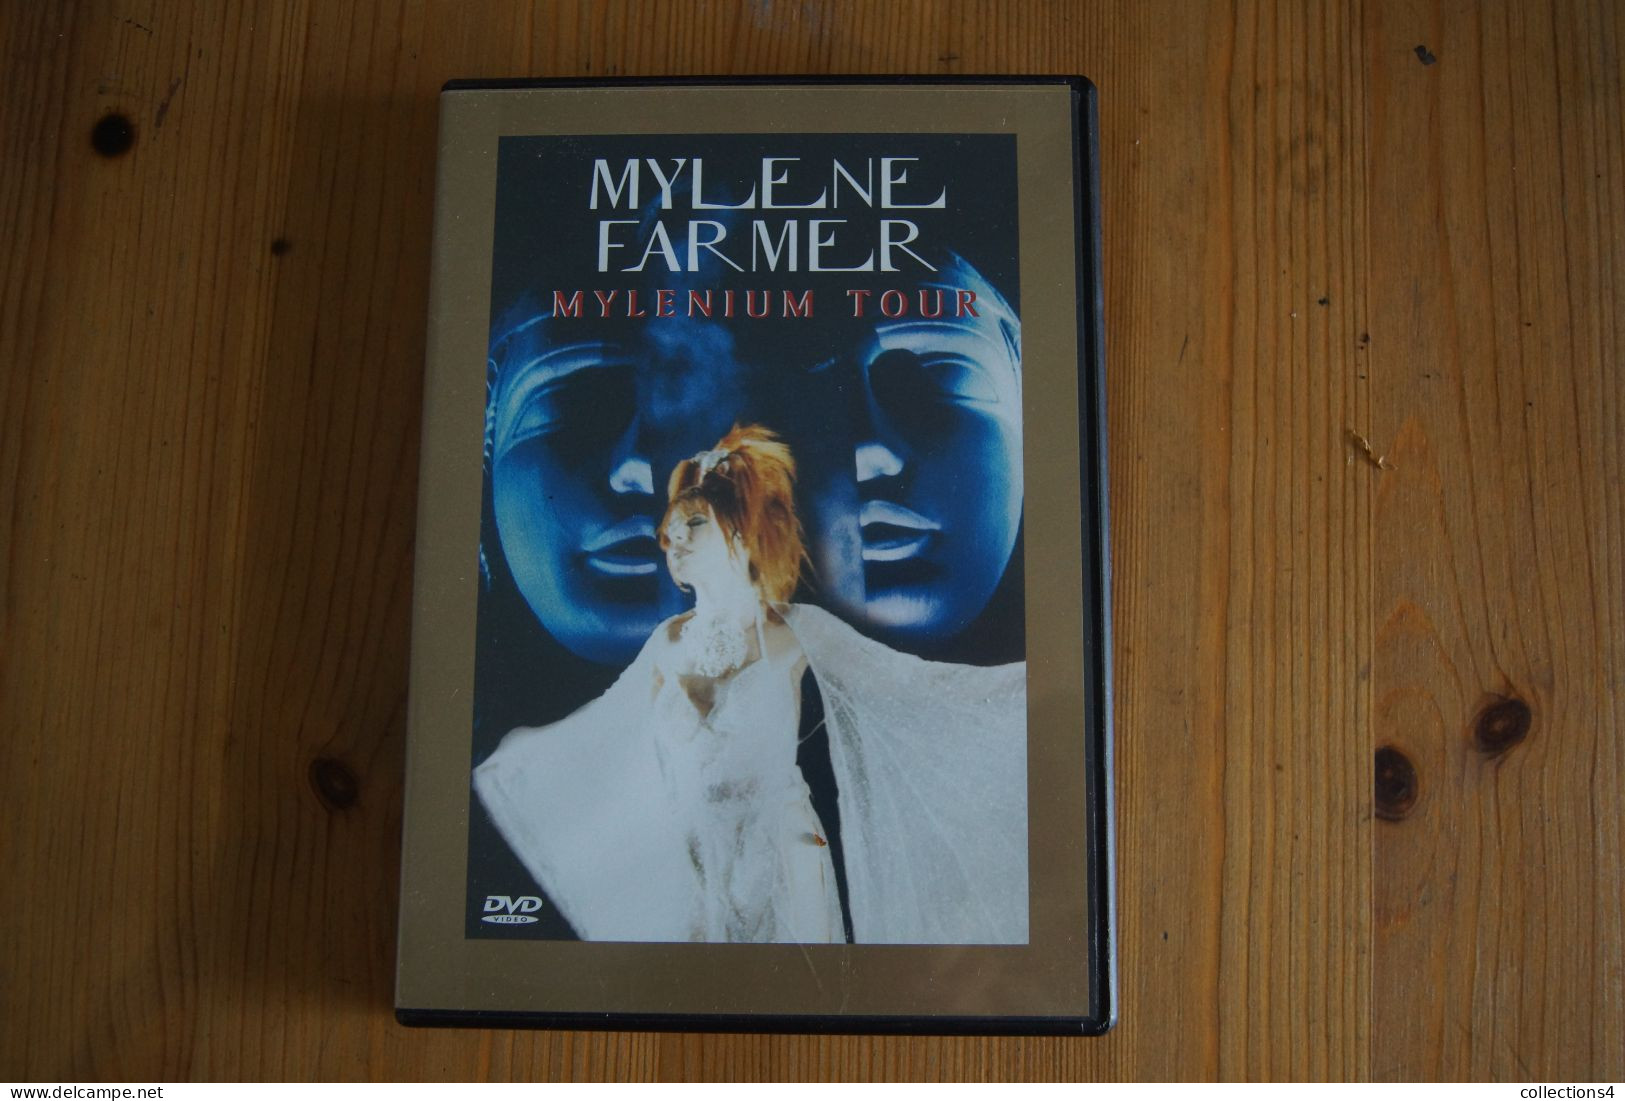 MYLENE FARMER MYLENIUM TOUR DVD 5 DEC 2000 - Concert & Music